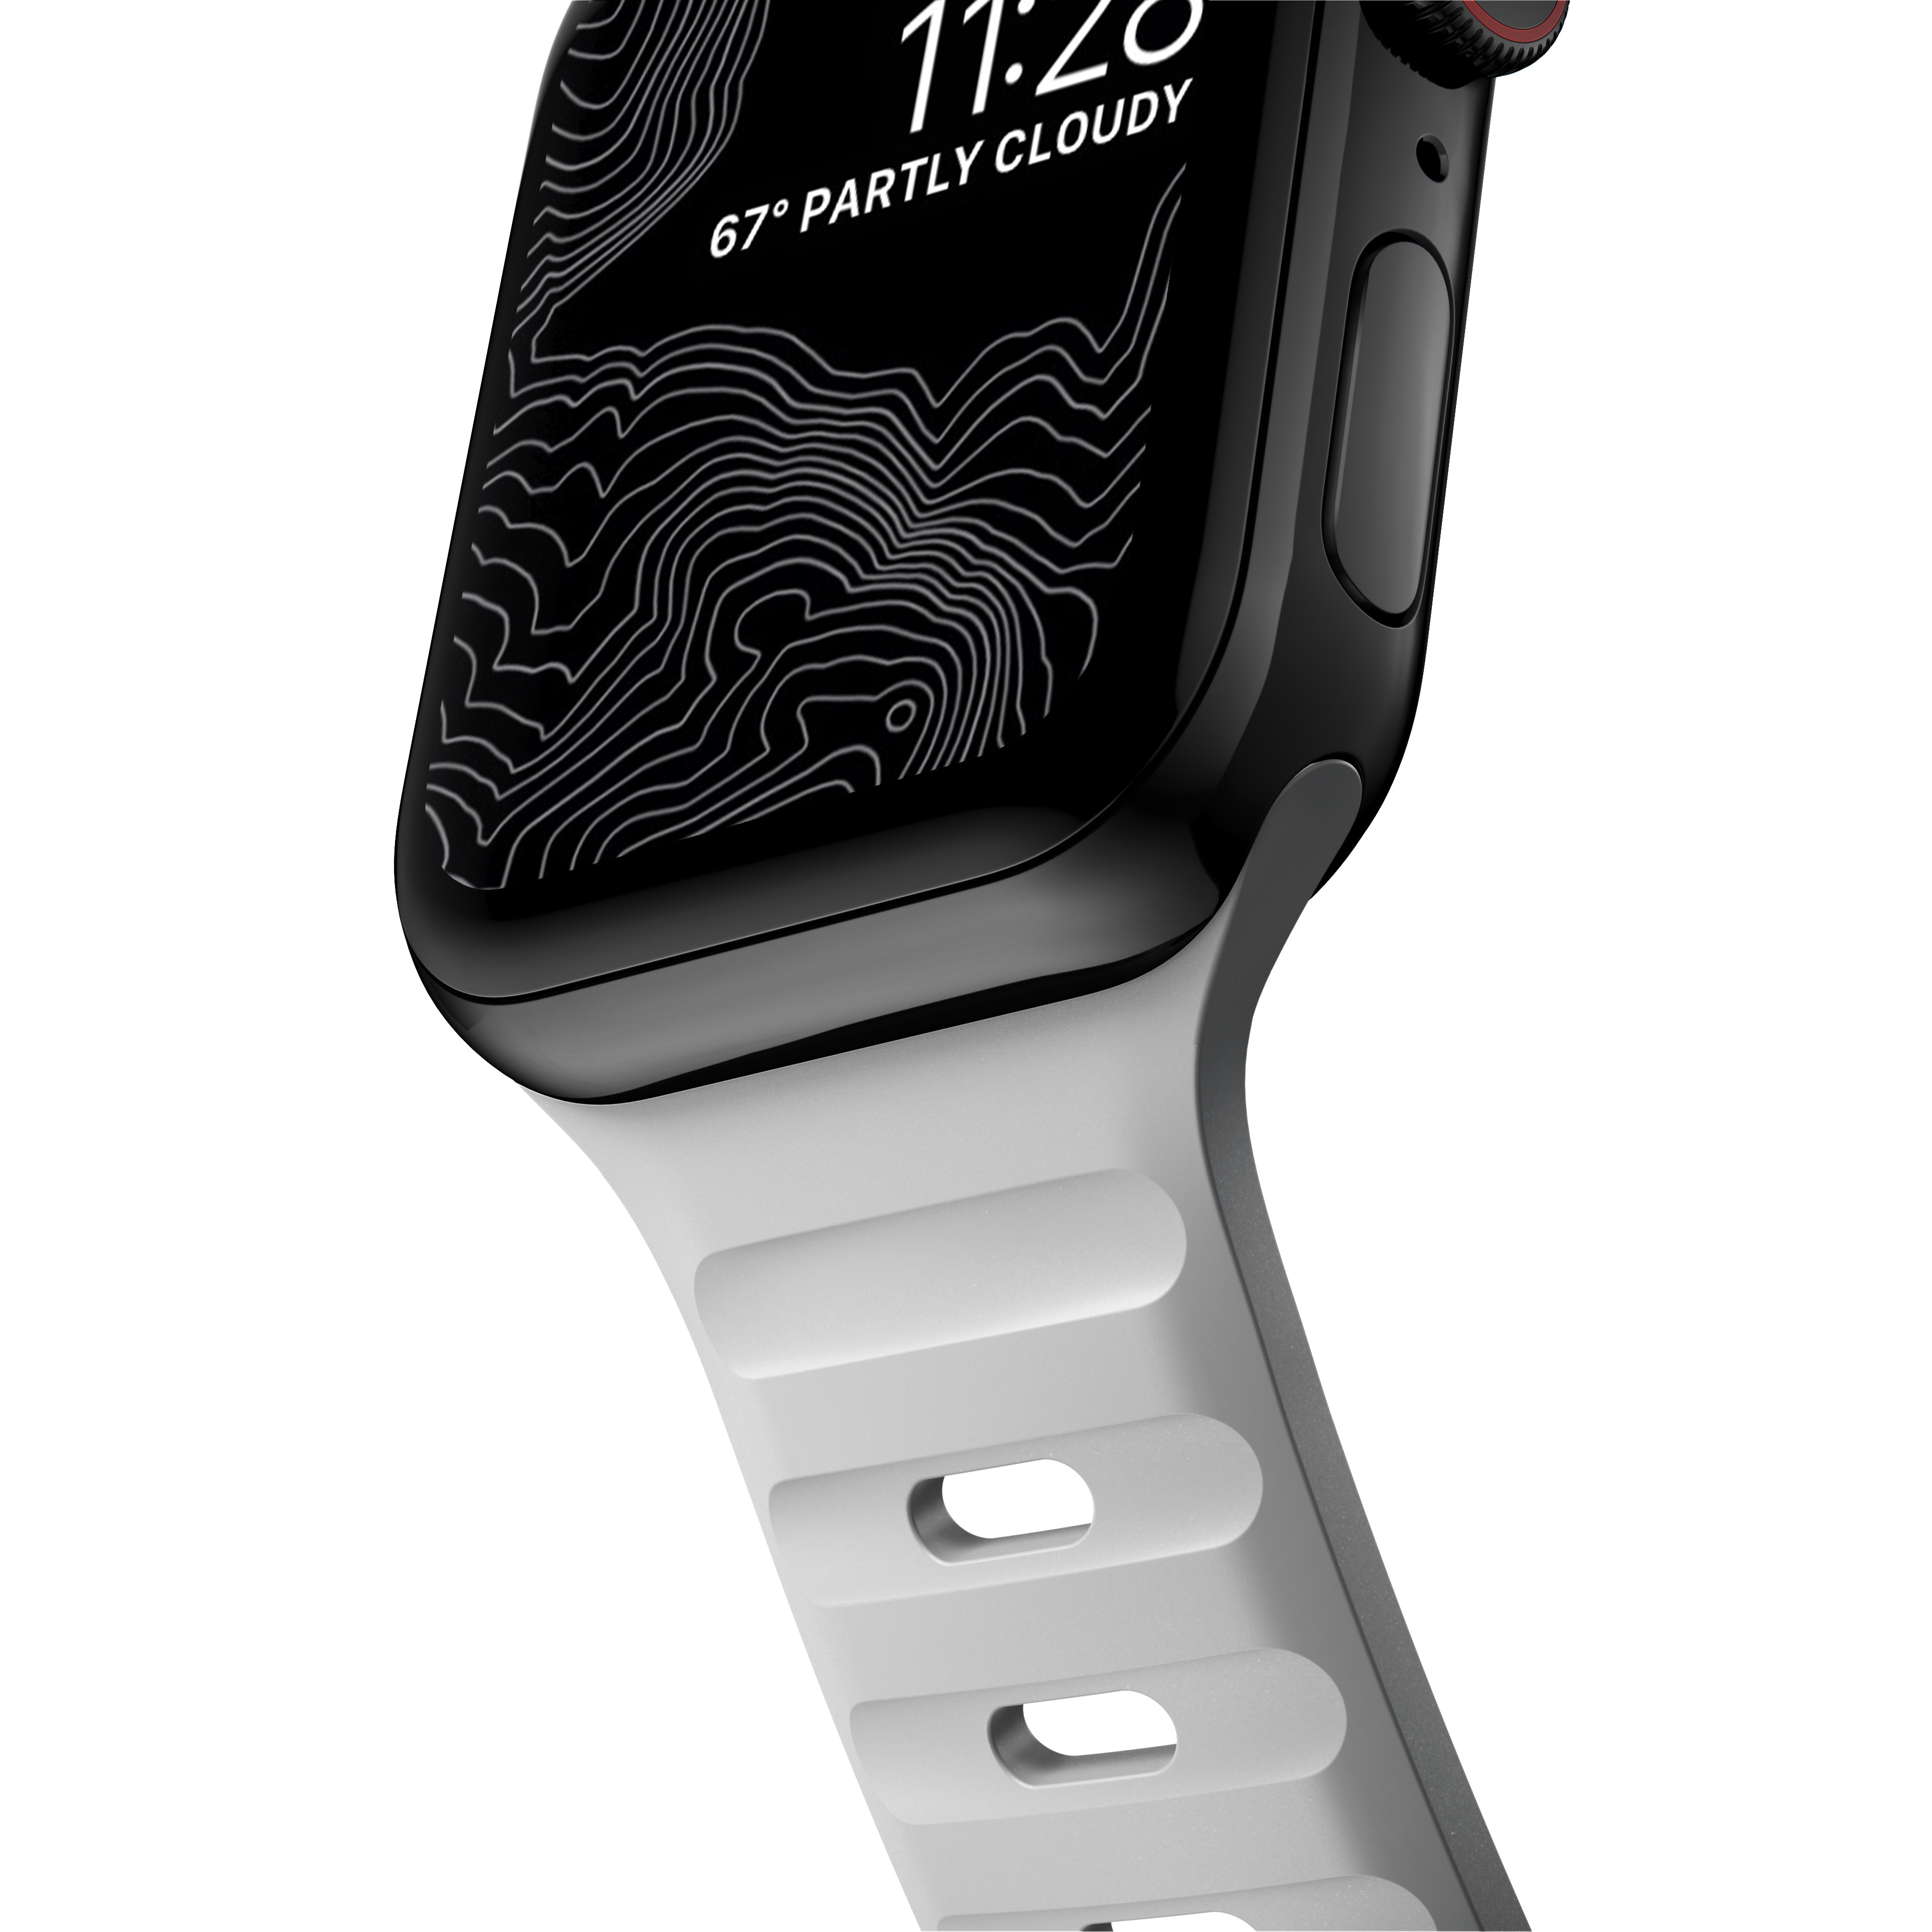 Apple Watch SE 44mm Sport Band Lunar Grey